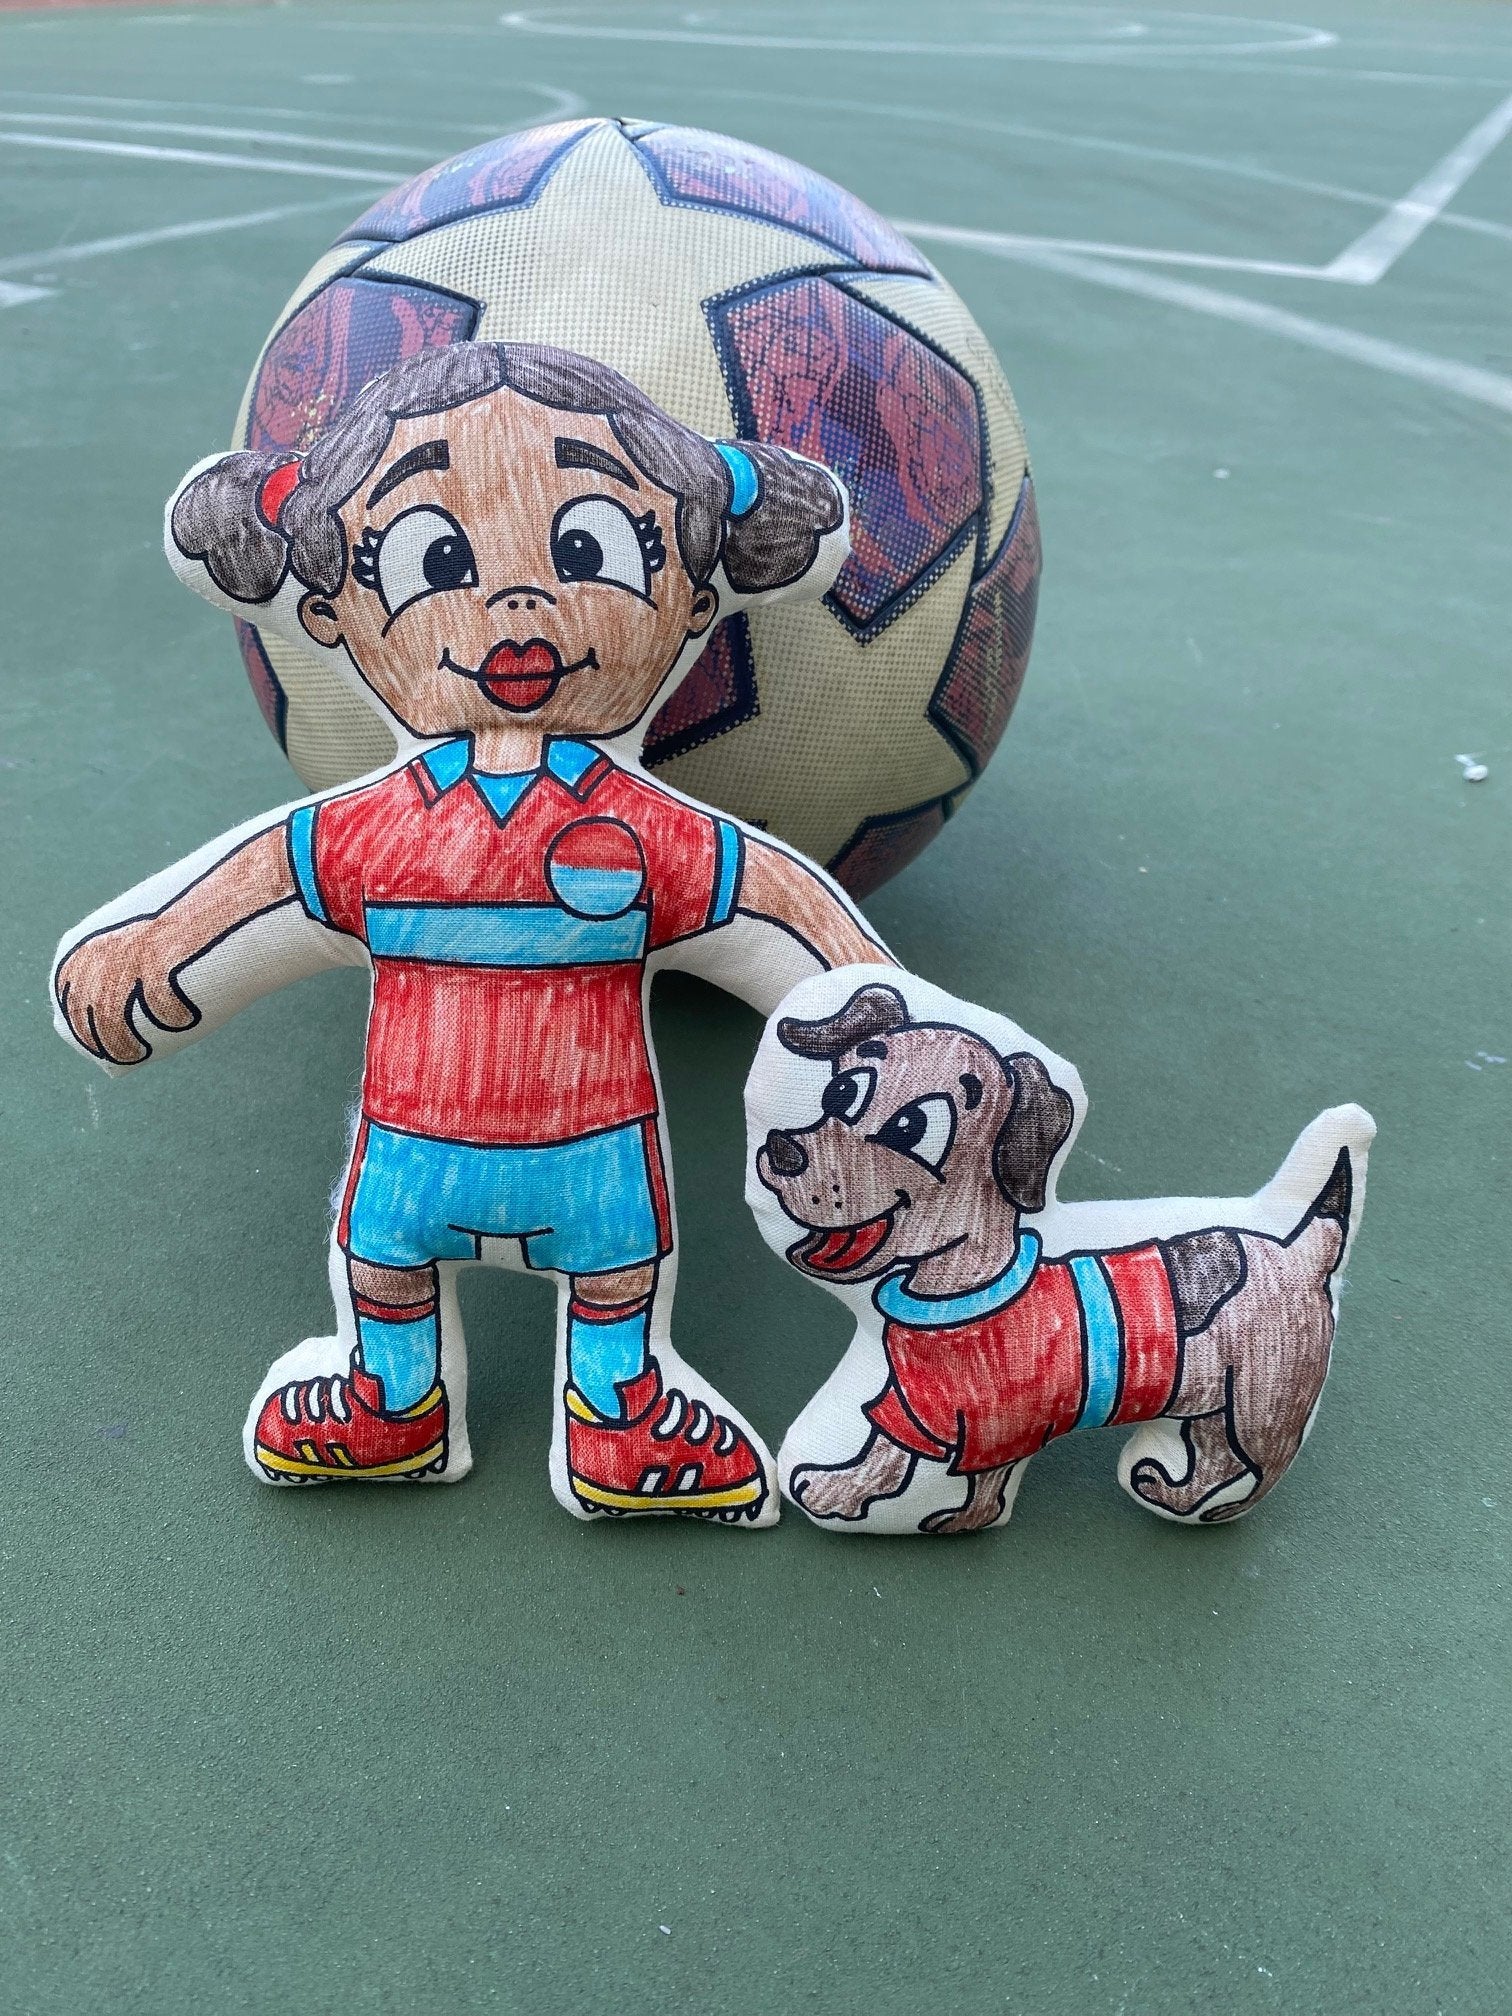 Art Kit for Kids - Soccer Girl with Pompons - Rag Doll for Coloring - Kiboo Creative